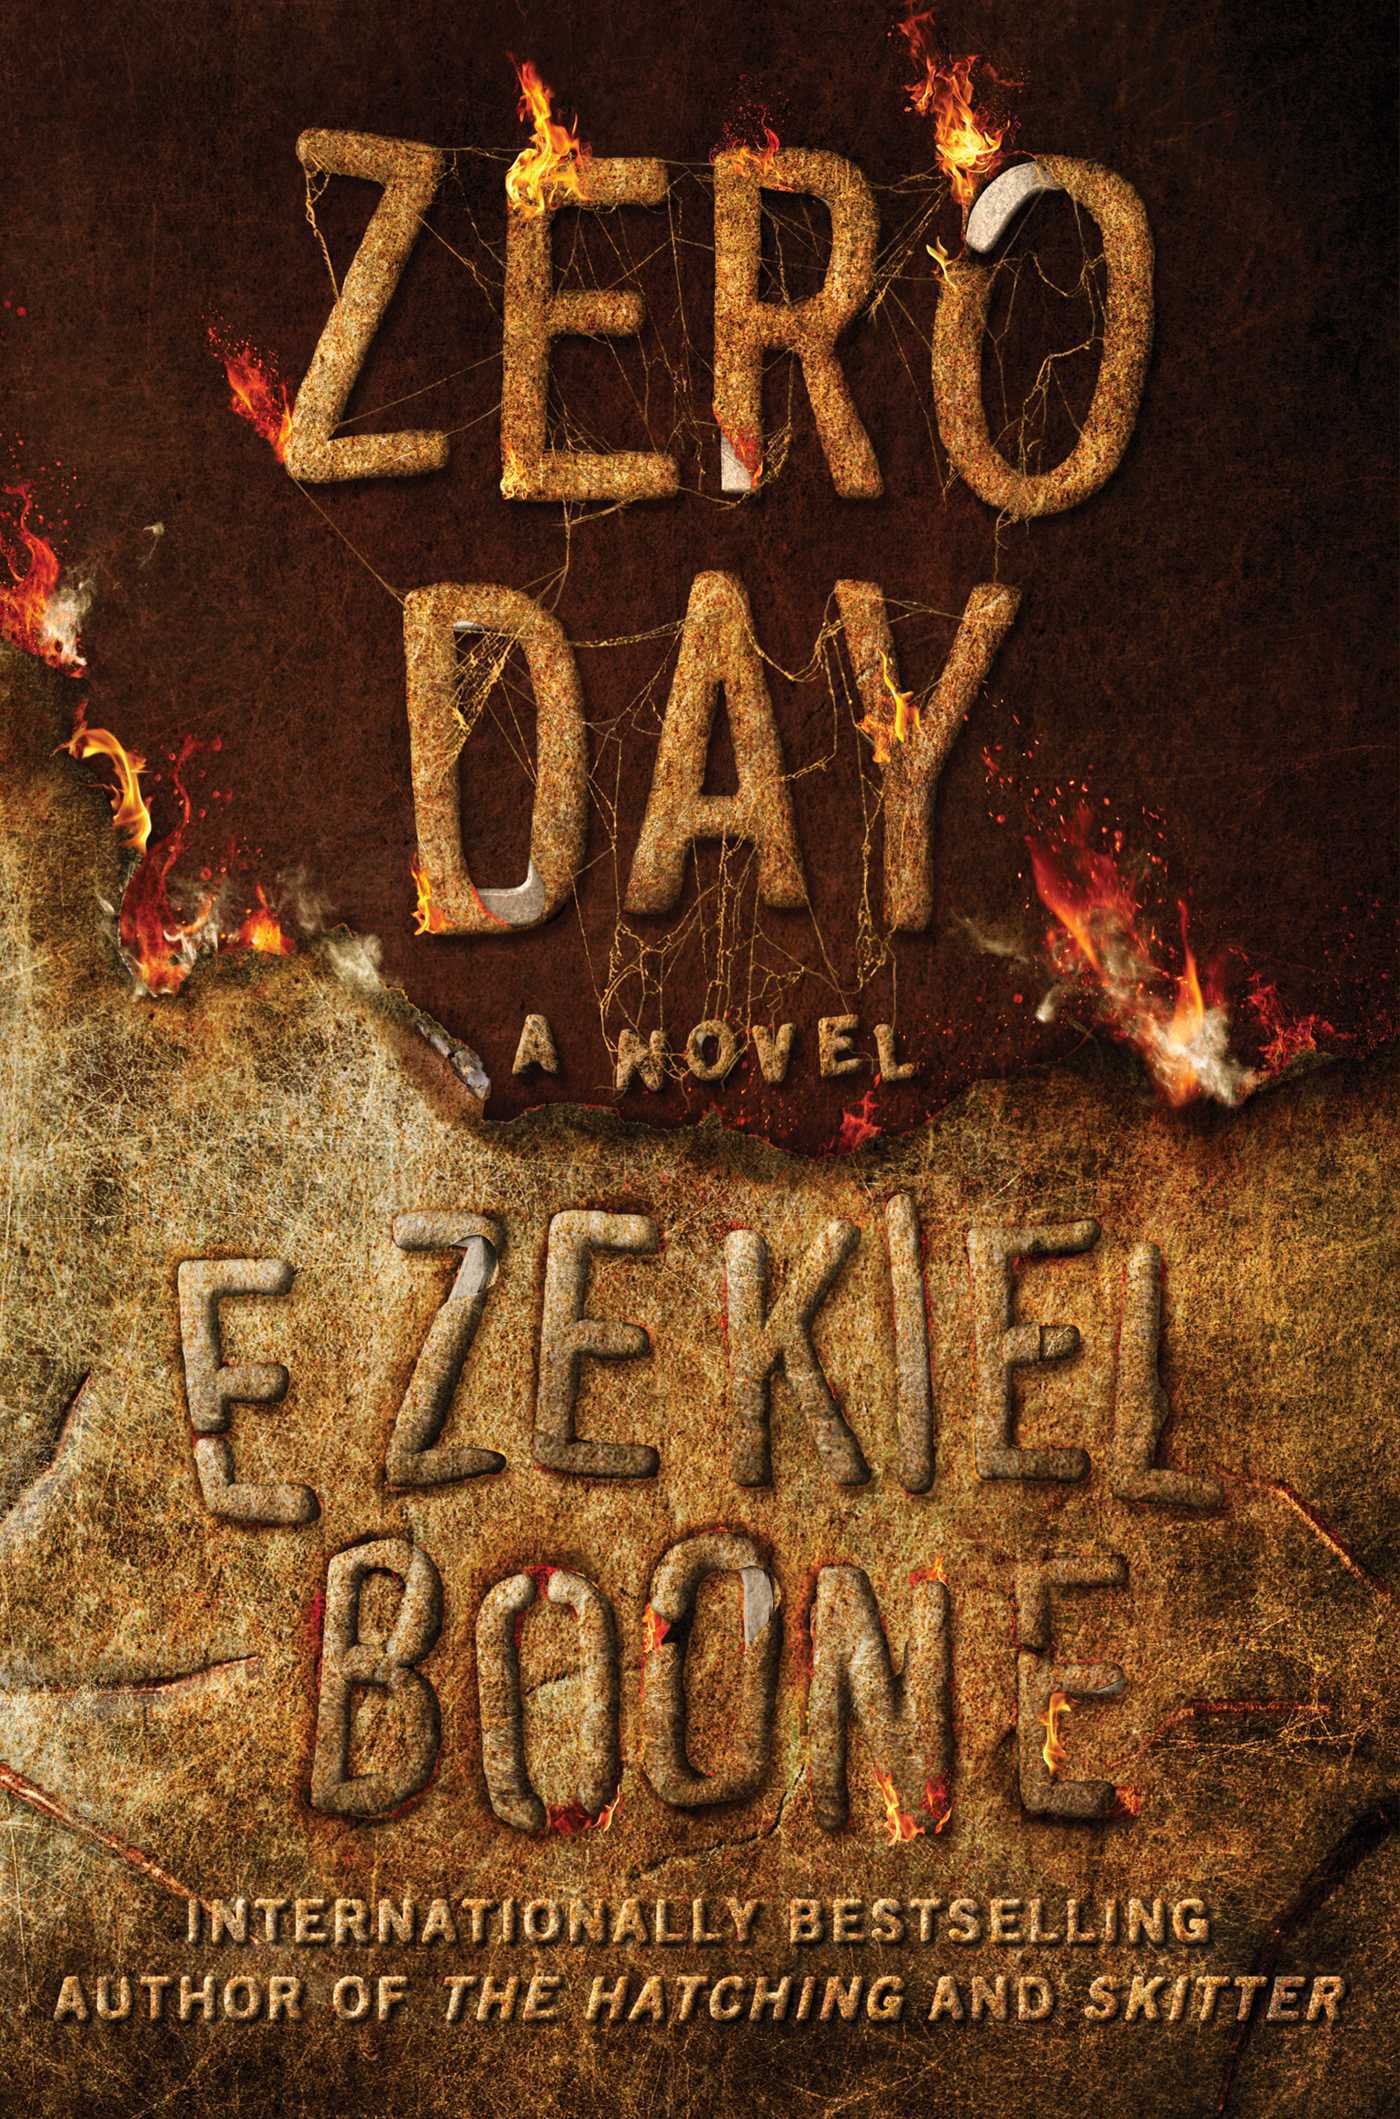 20. Zero Day (The Hatching) by Ezekiel Boone